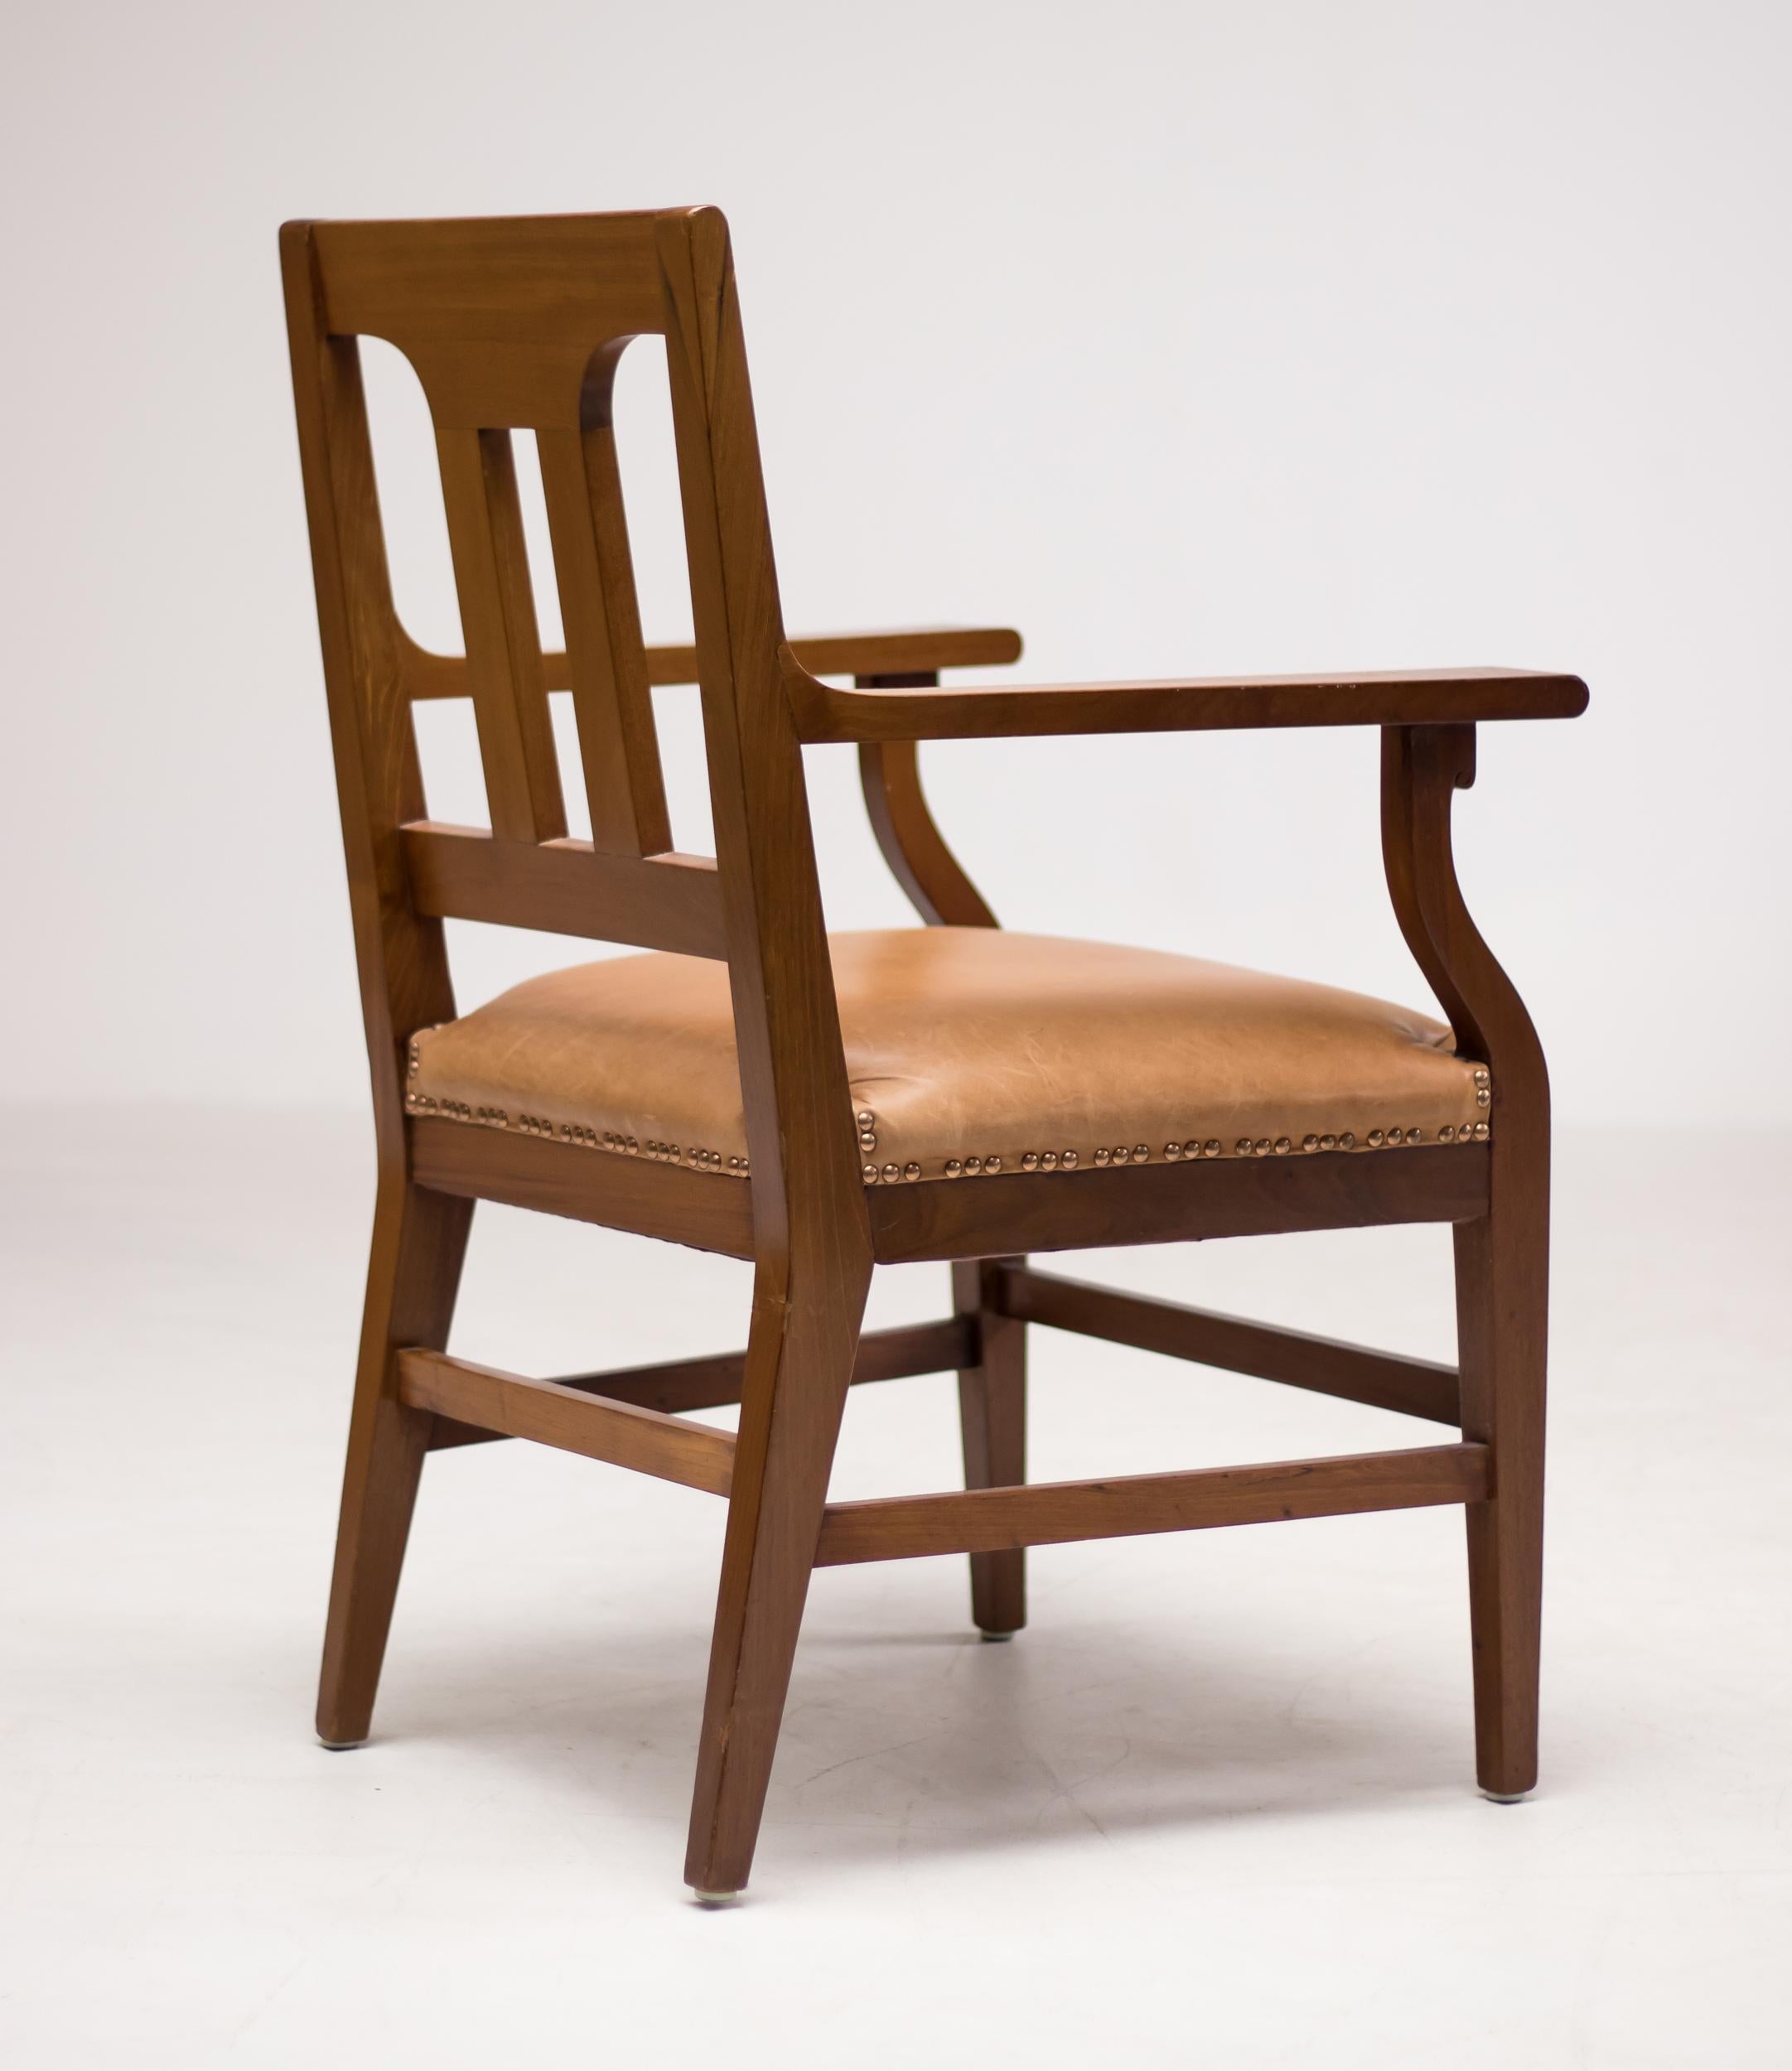 Rare armchair designed in 1910 by Kobus de Graaff, model; 